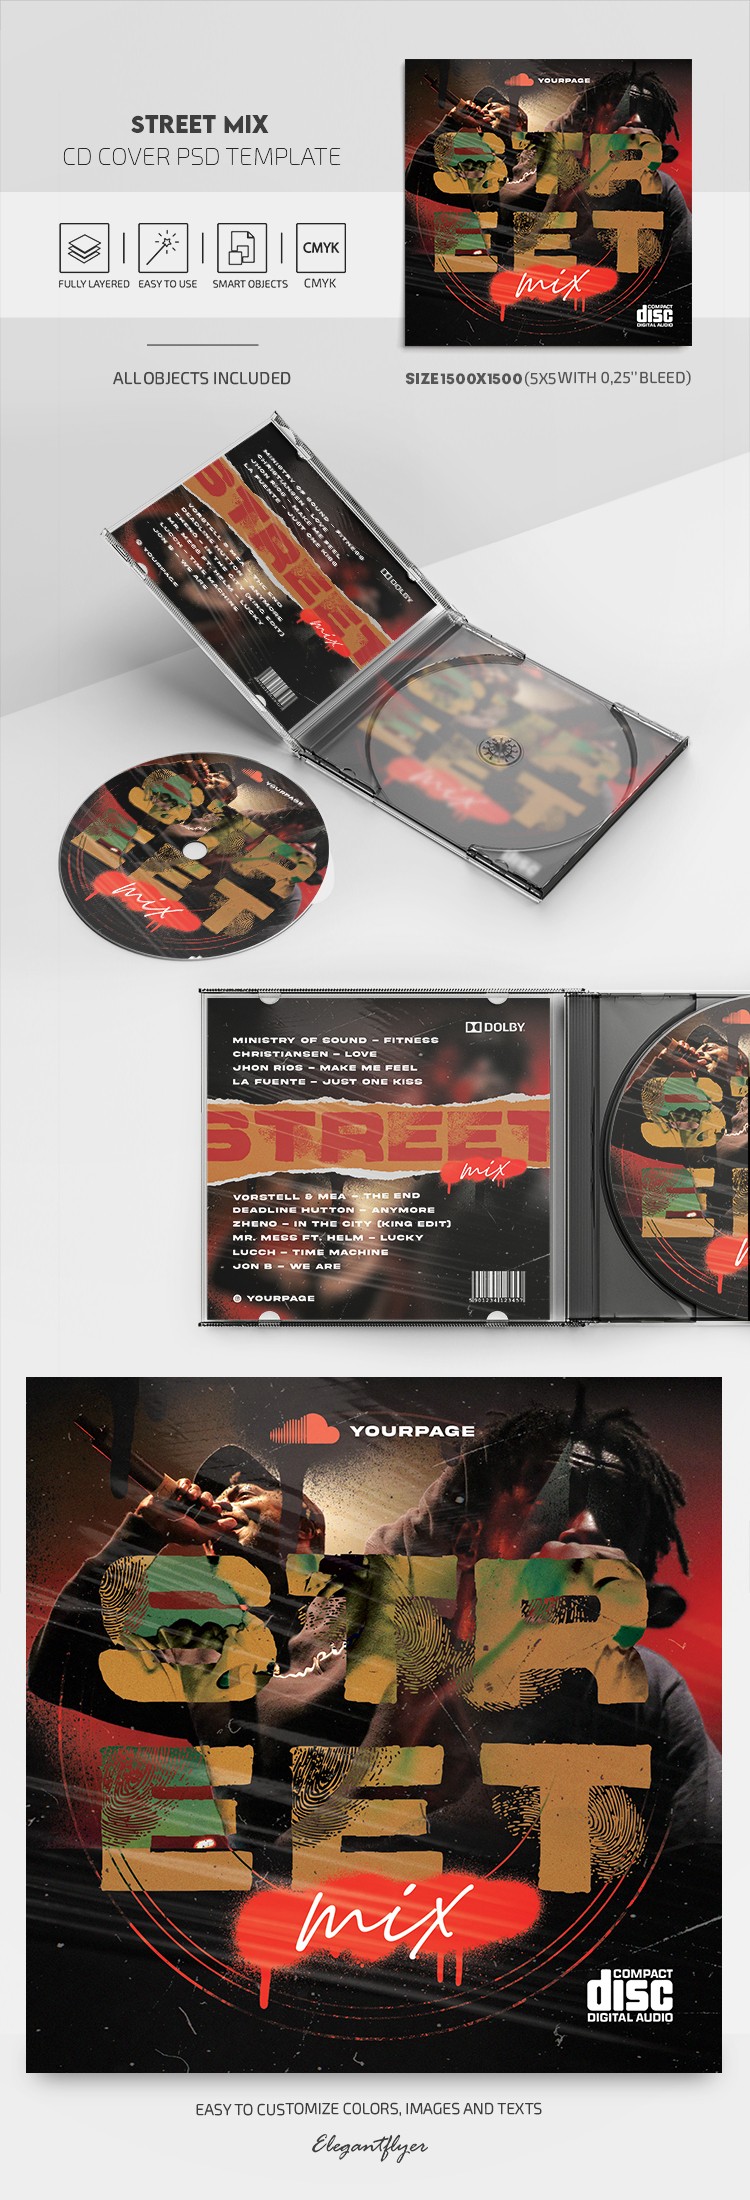 Street Mix CD Cover by ElegantFlyer